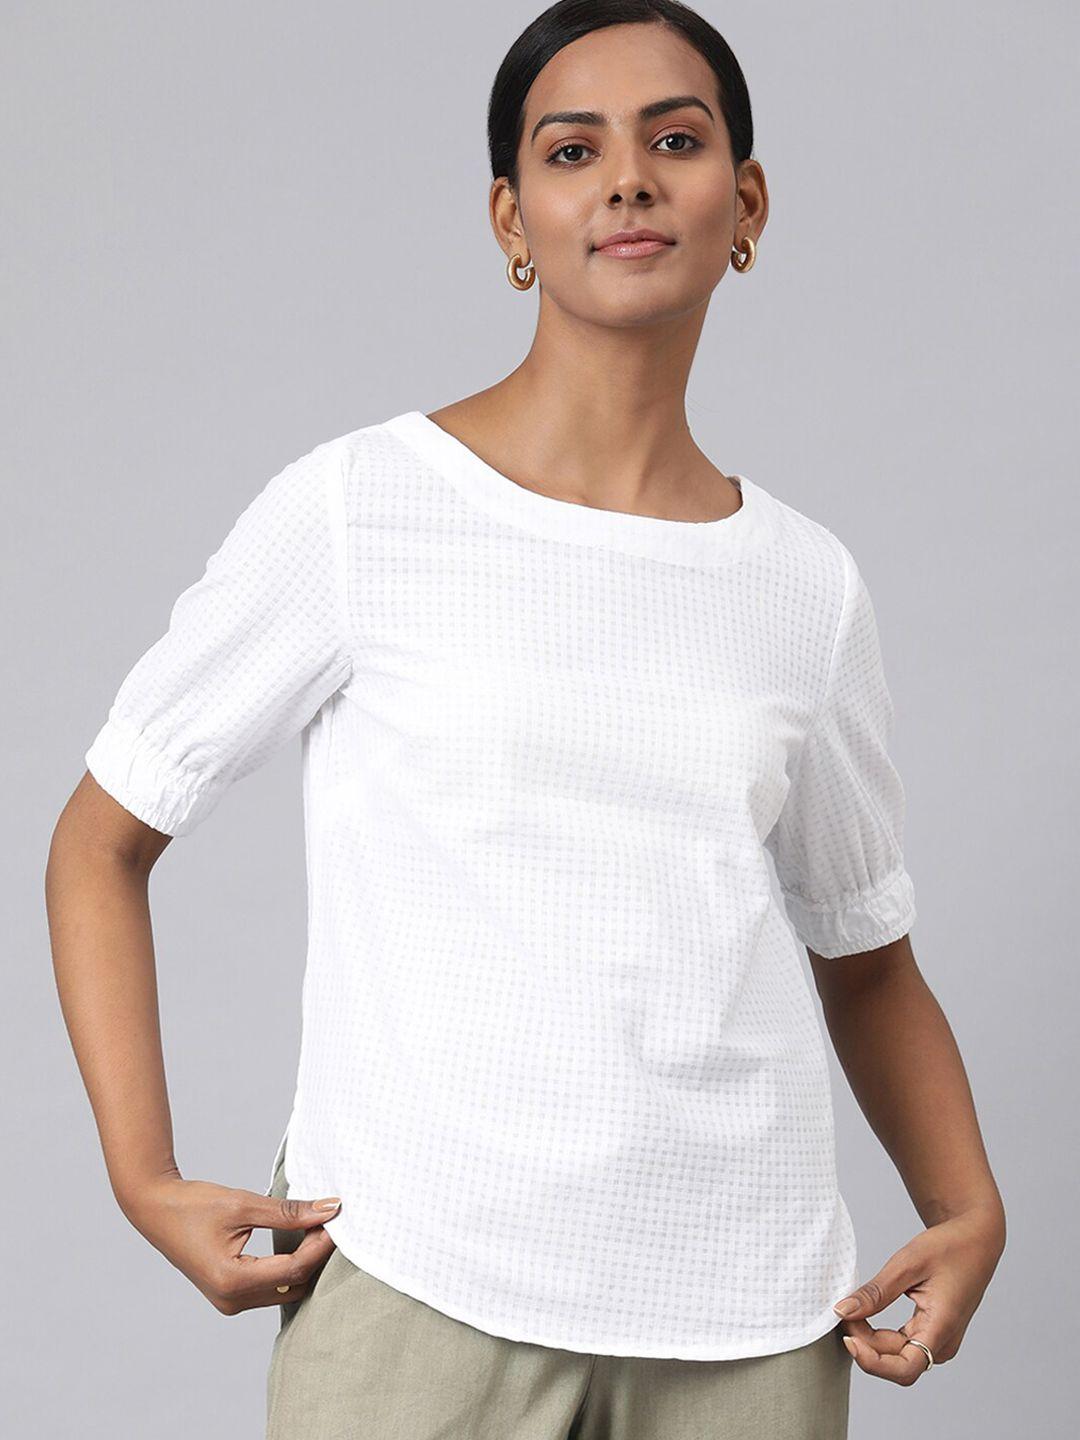 fabindia-women-white-solid-cotton-top